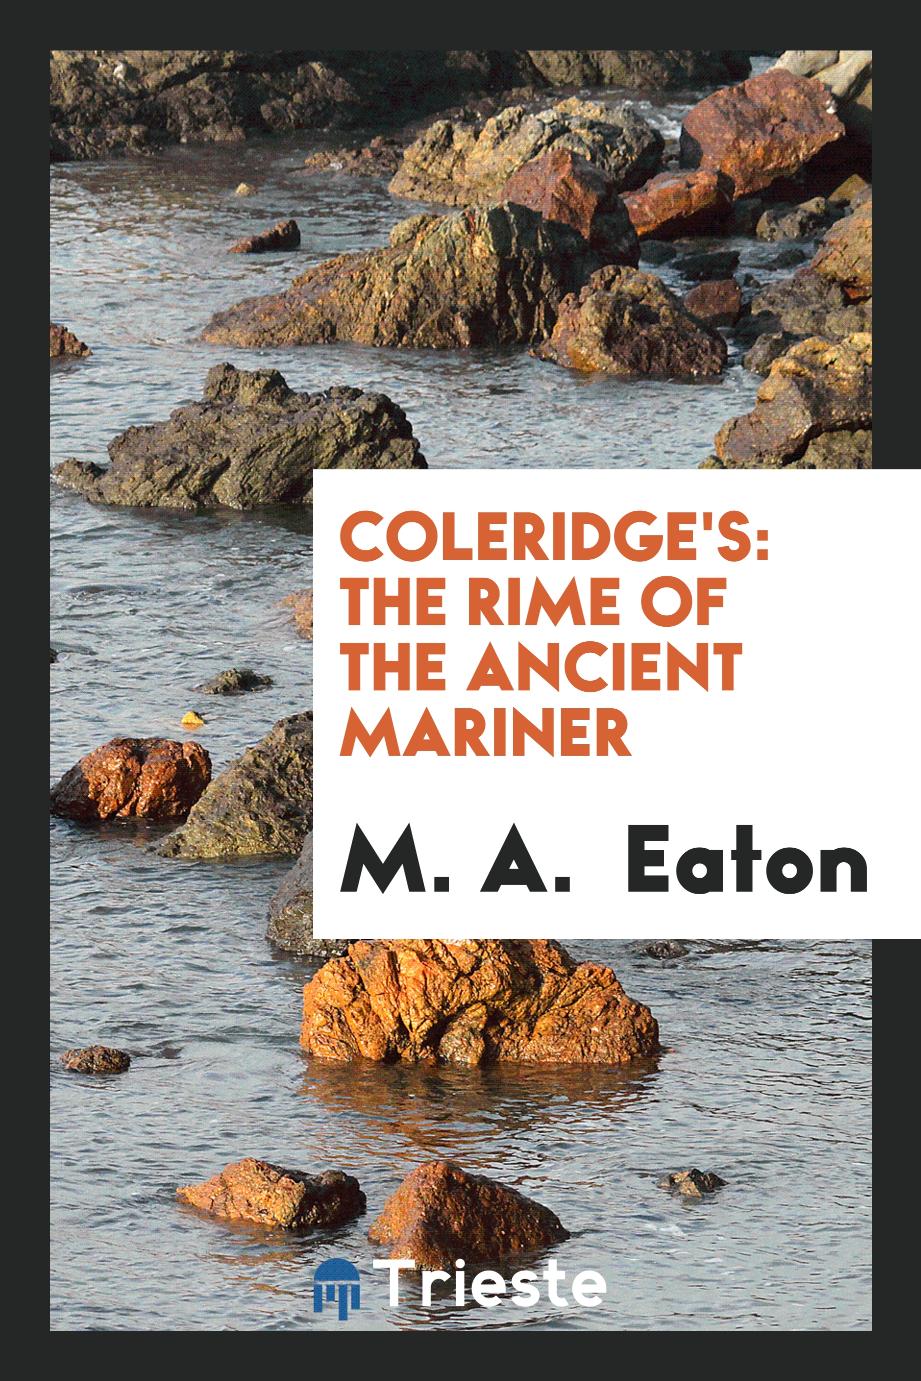 Coleridge's: The Rime of the Ancient Mariner